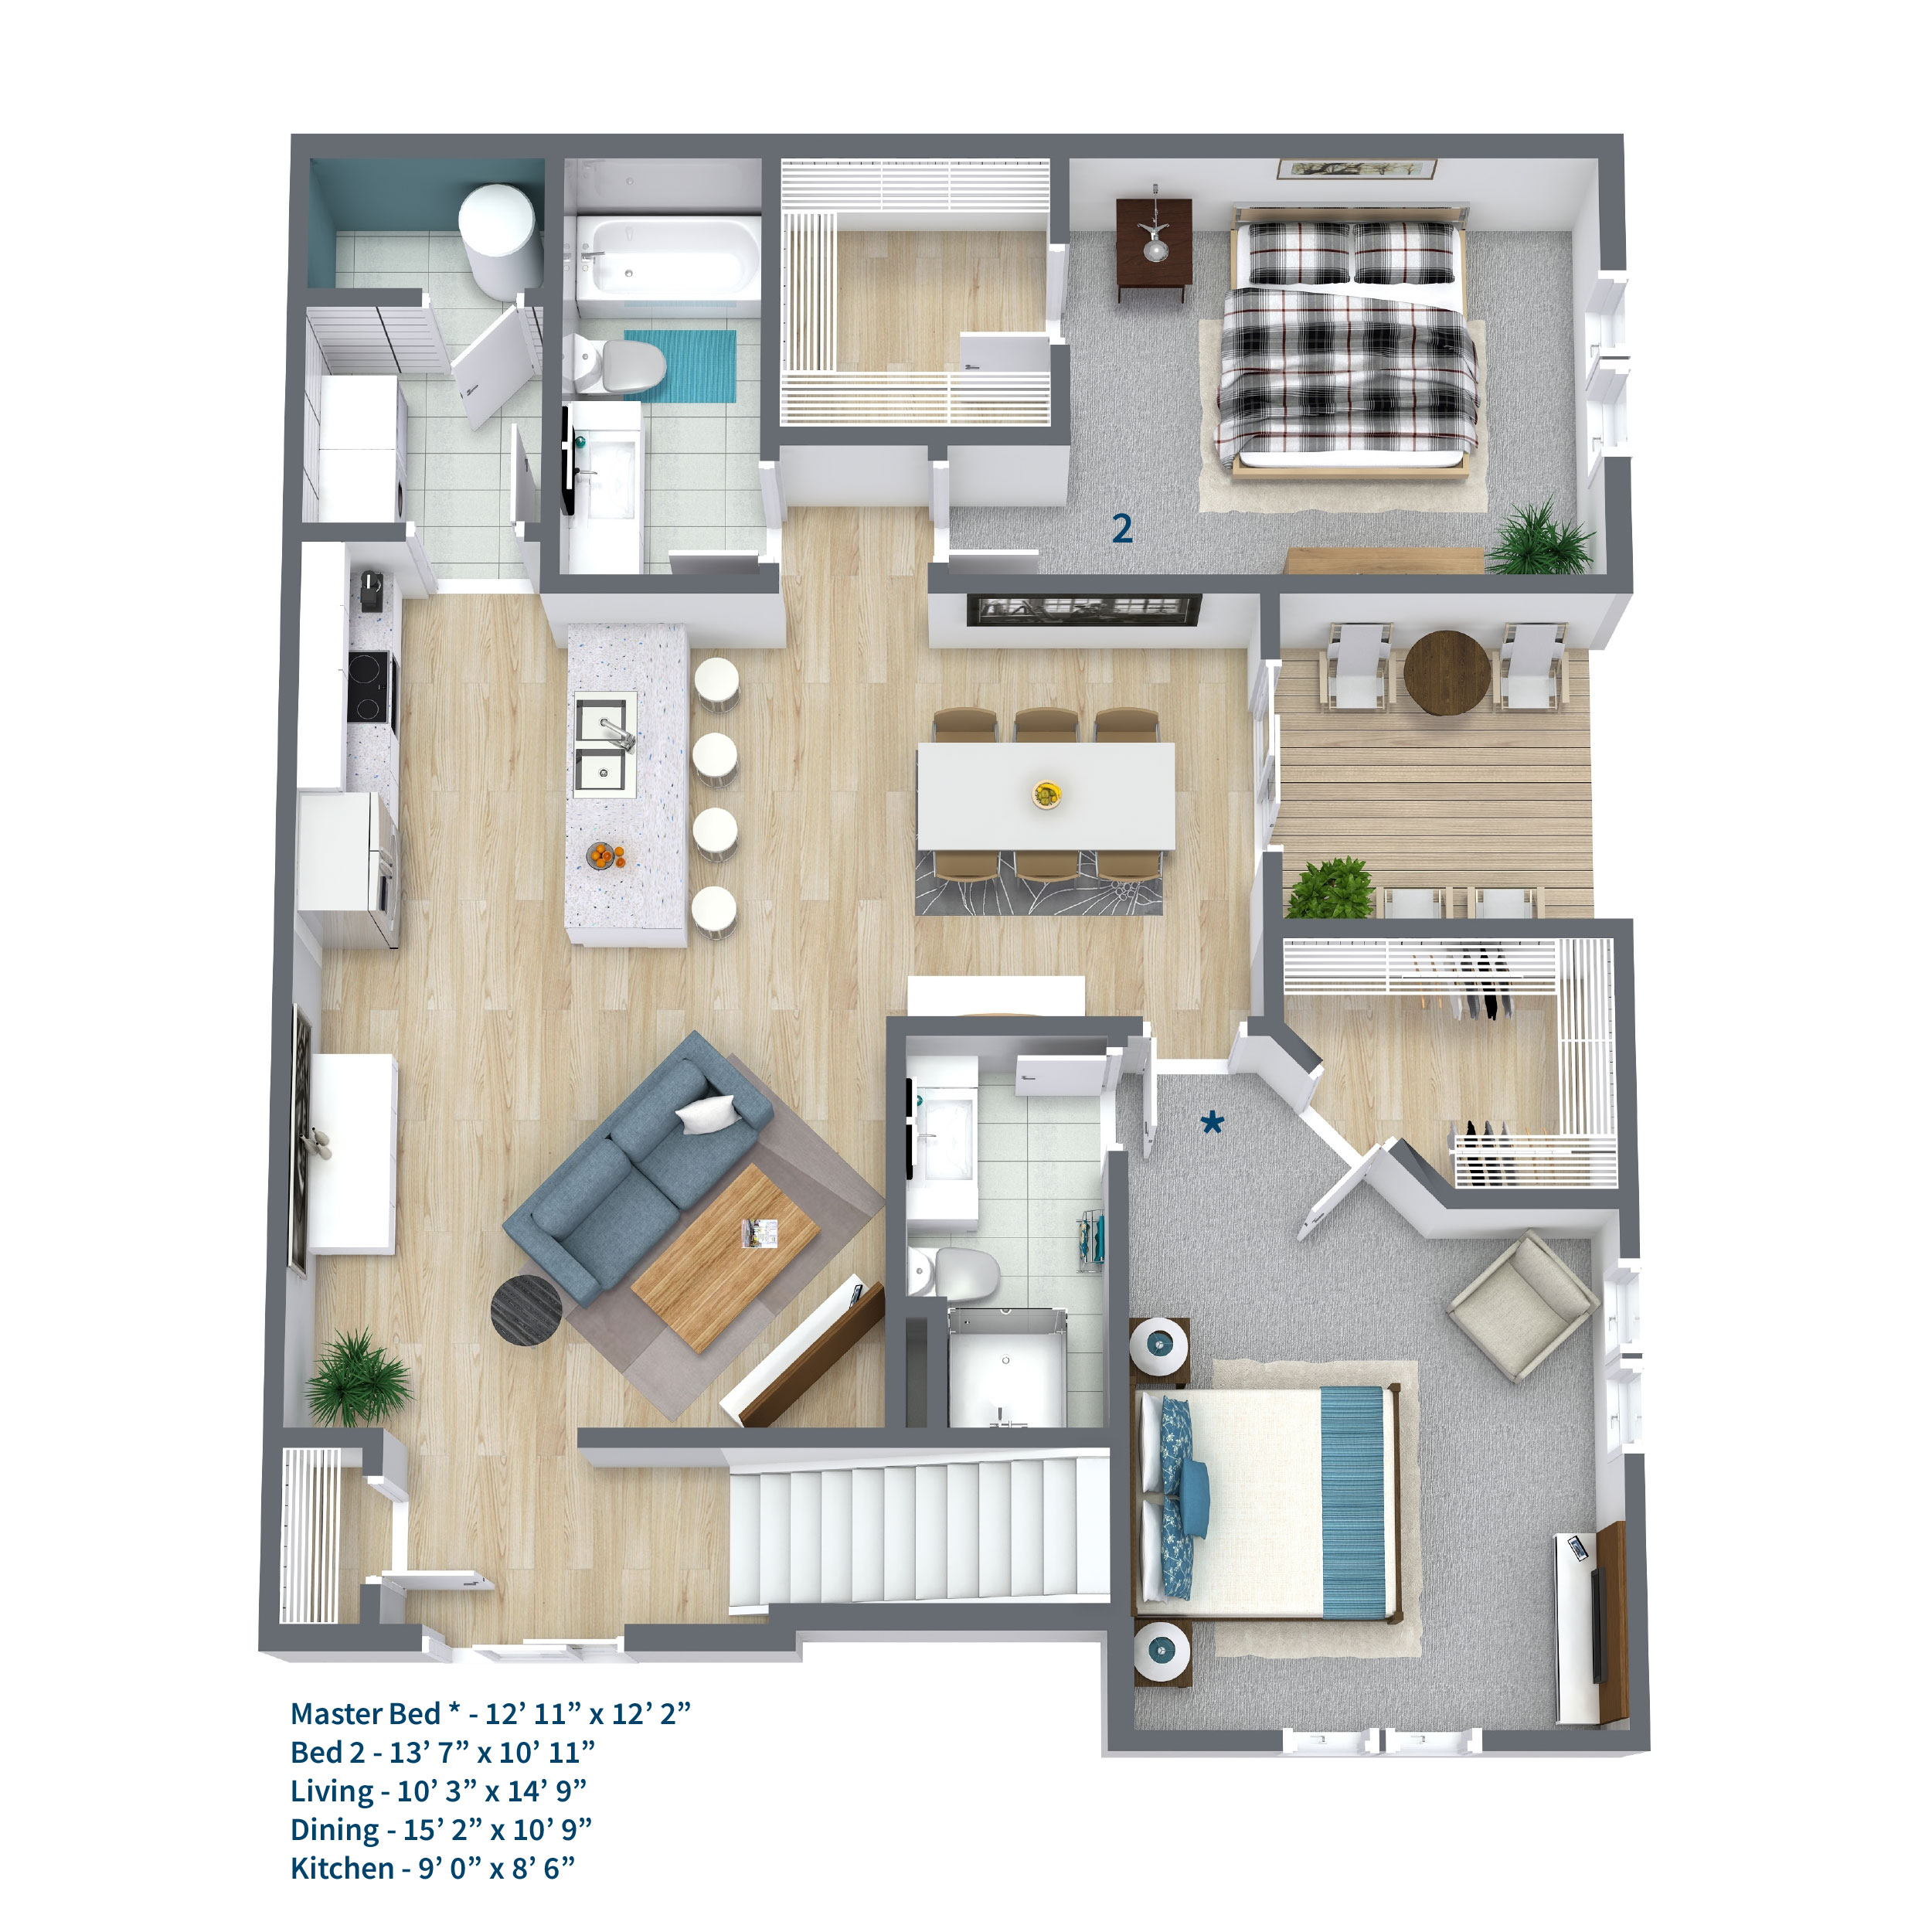 Floorplan - Mercato image